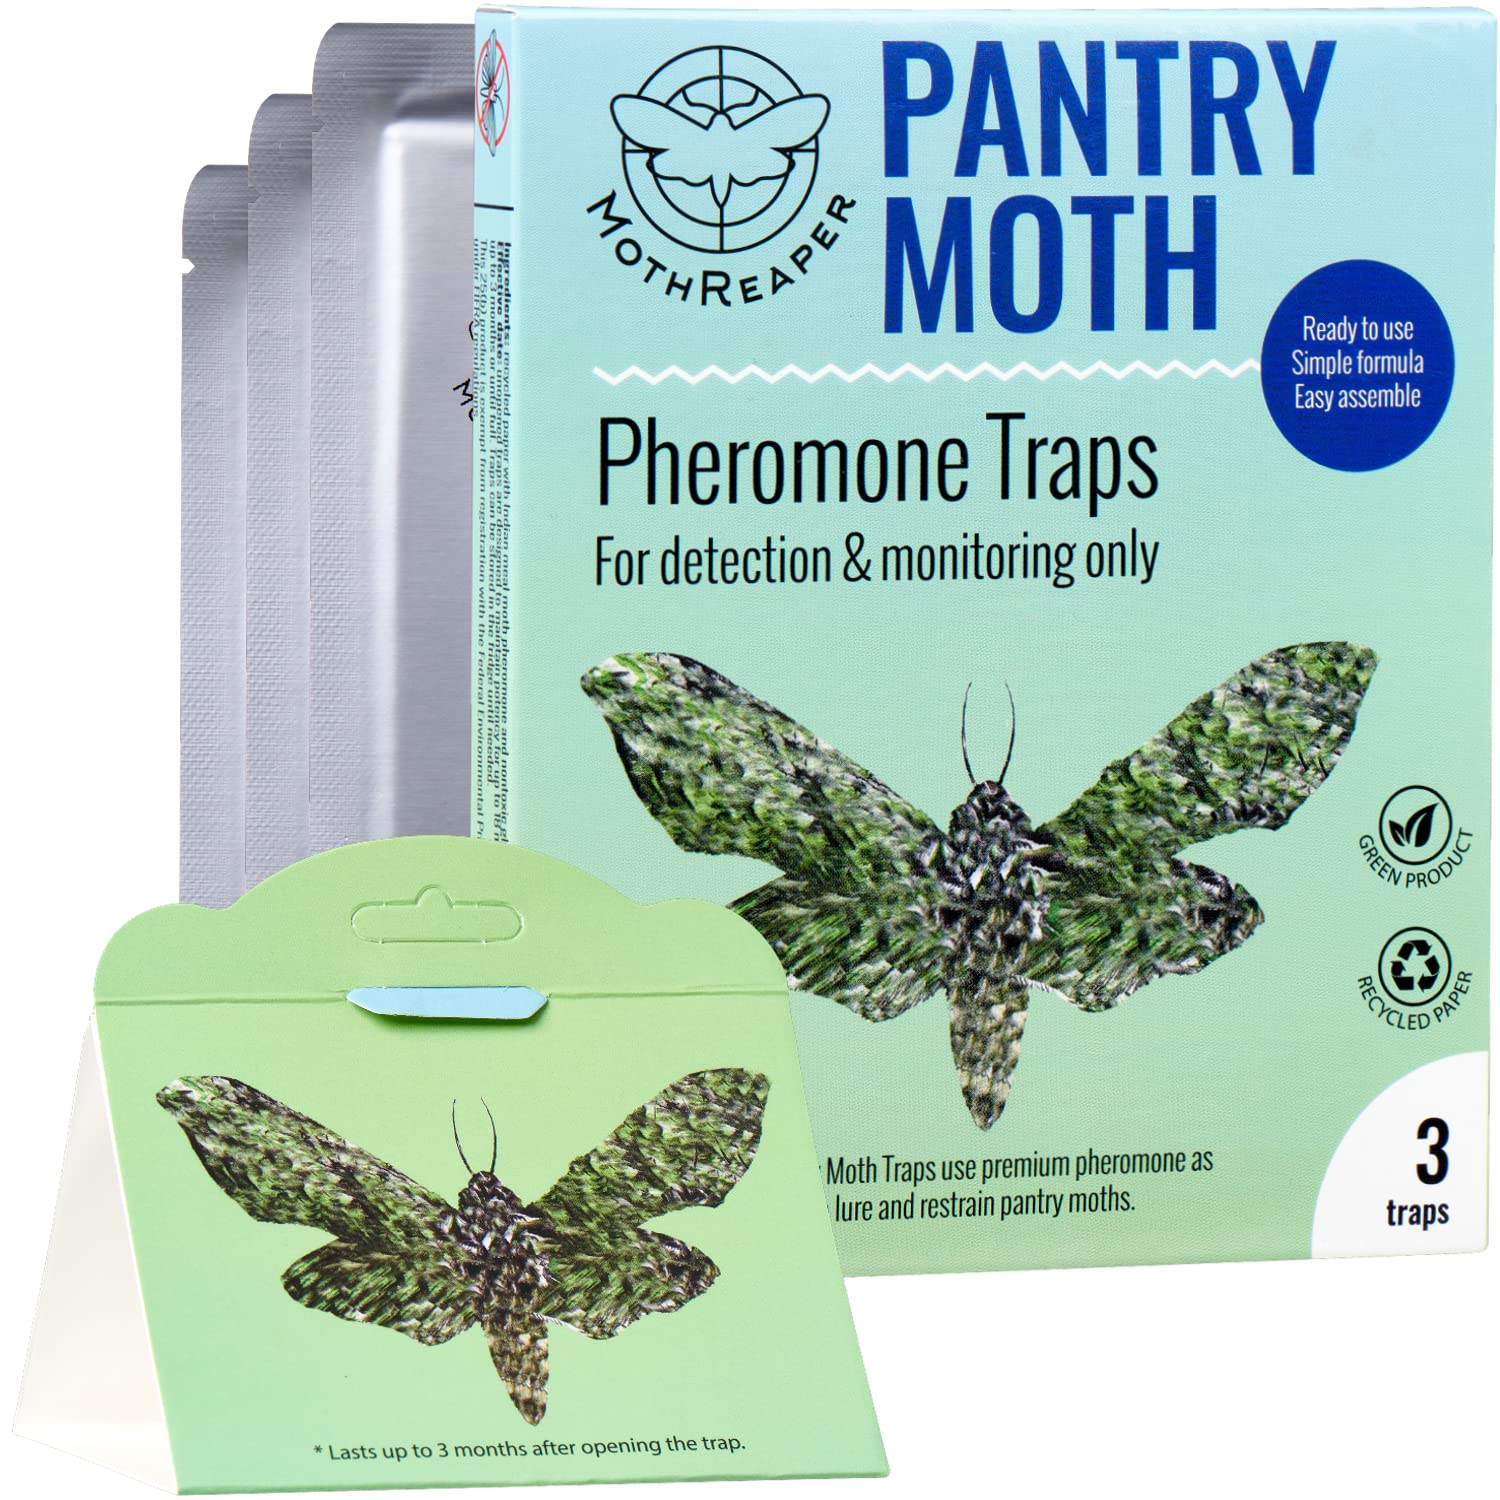 revolutionizing pantry storage the moth pantry food solution